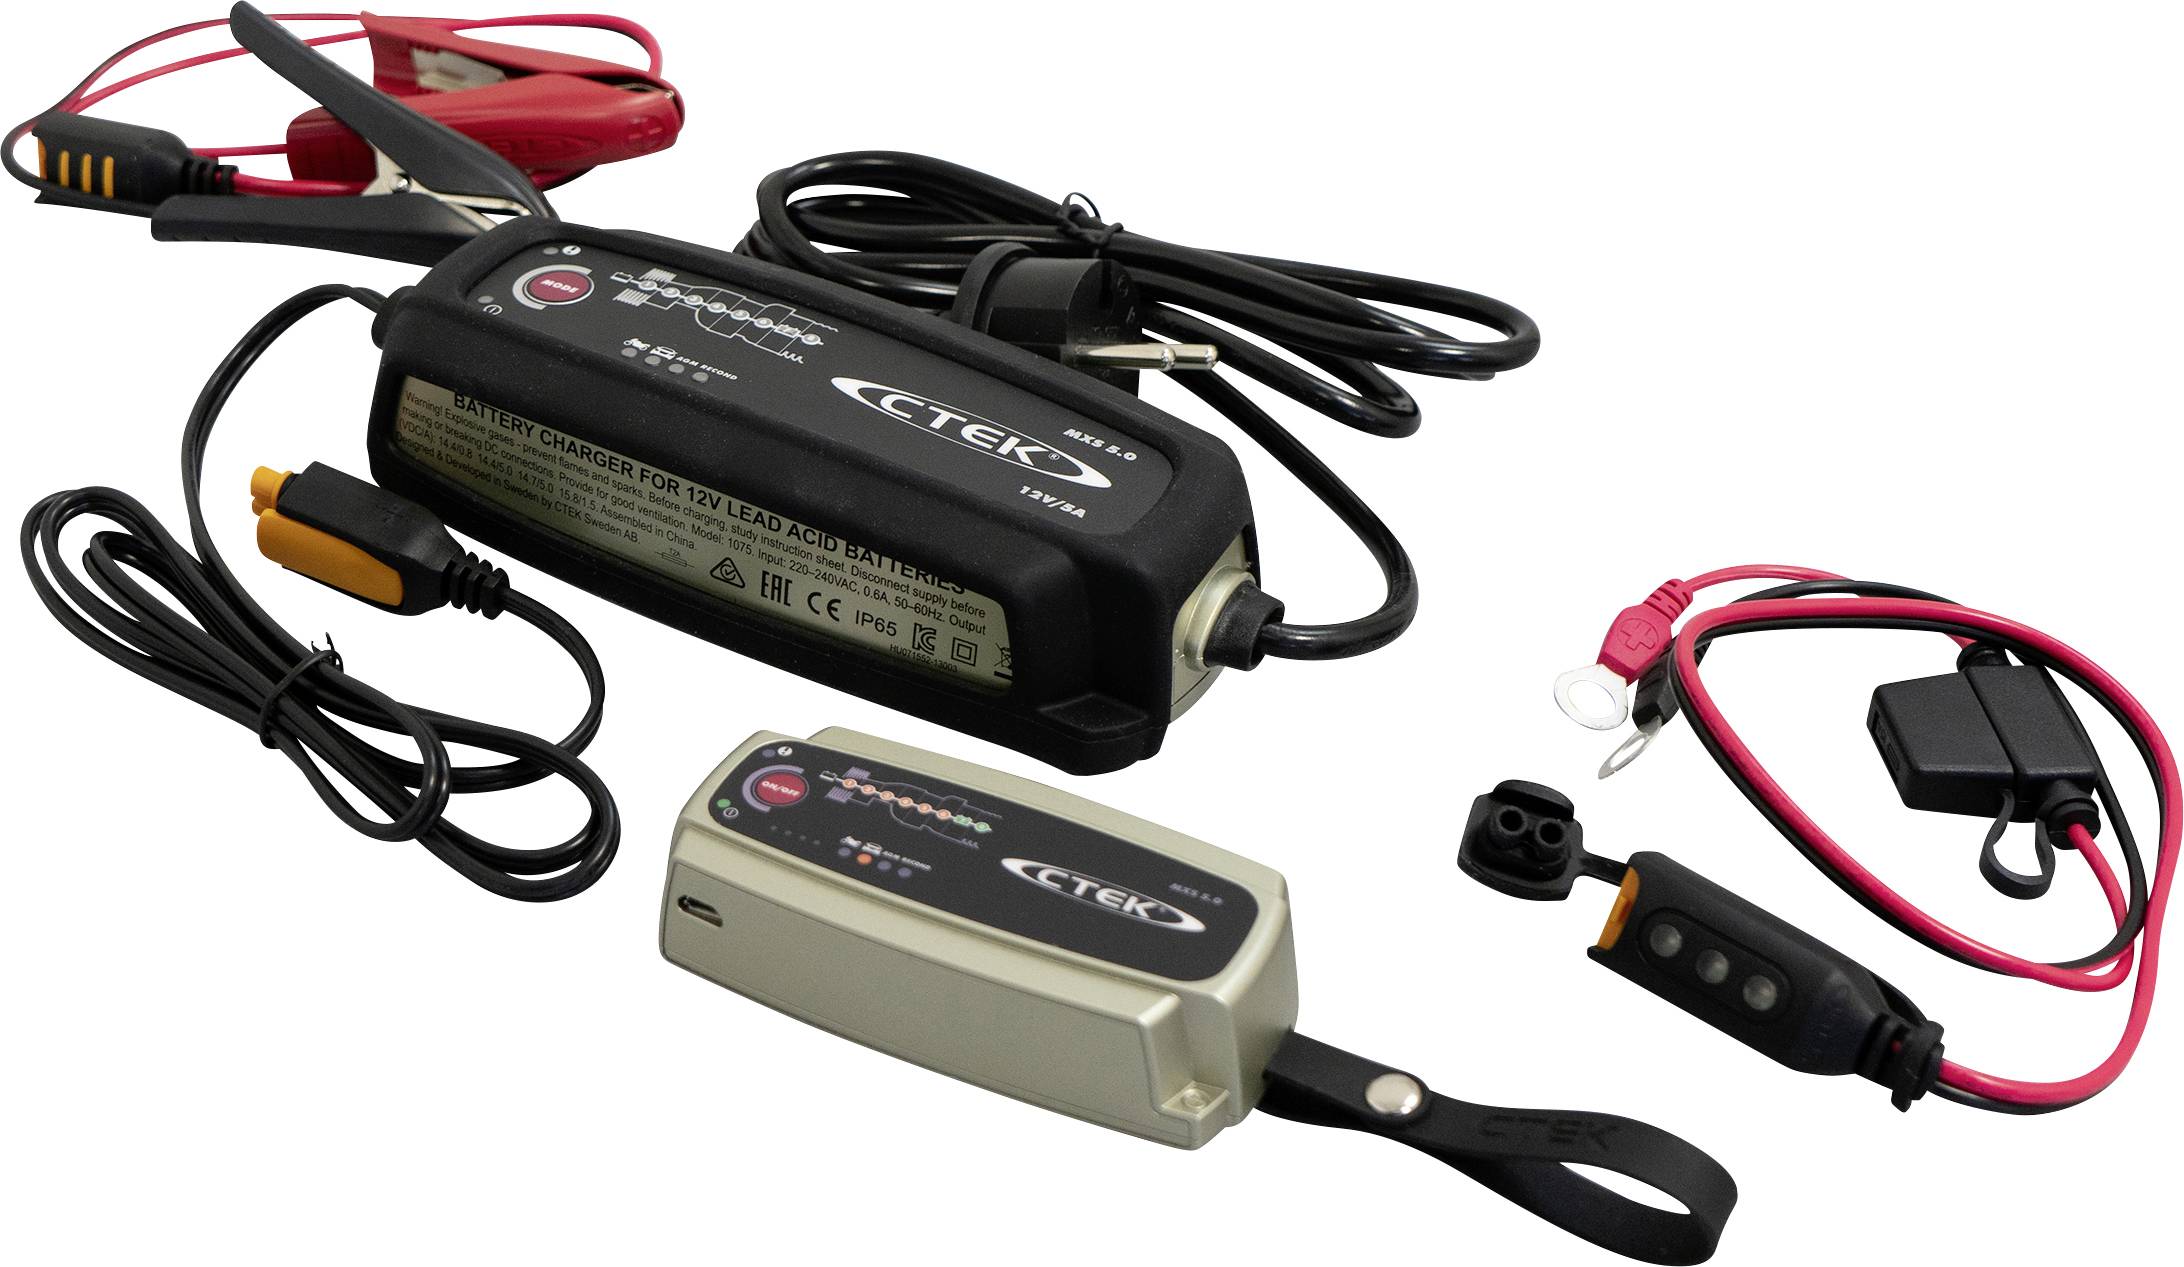 Ctek charger accessories